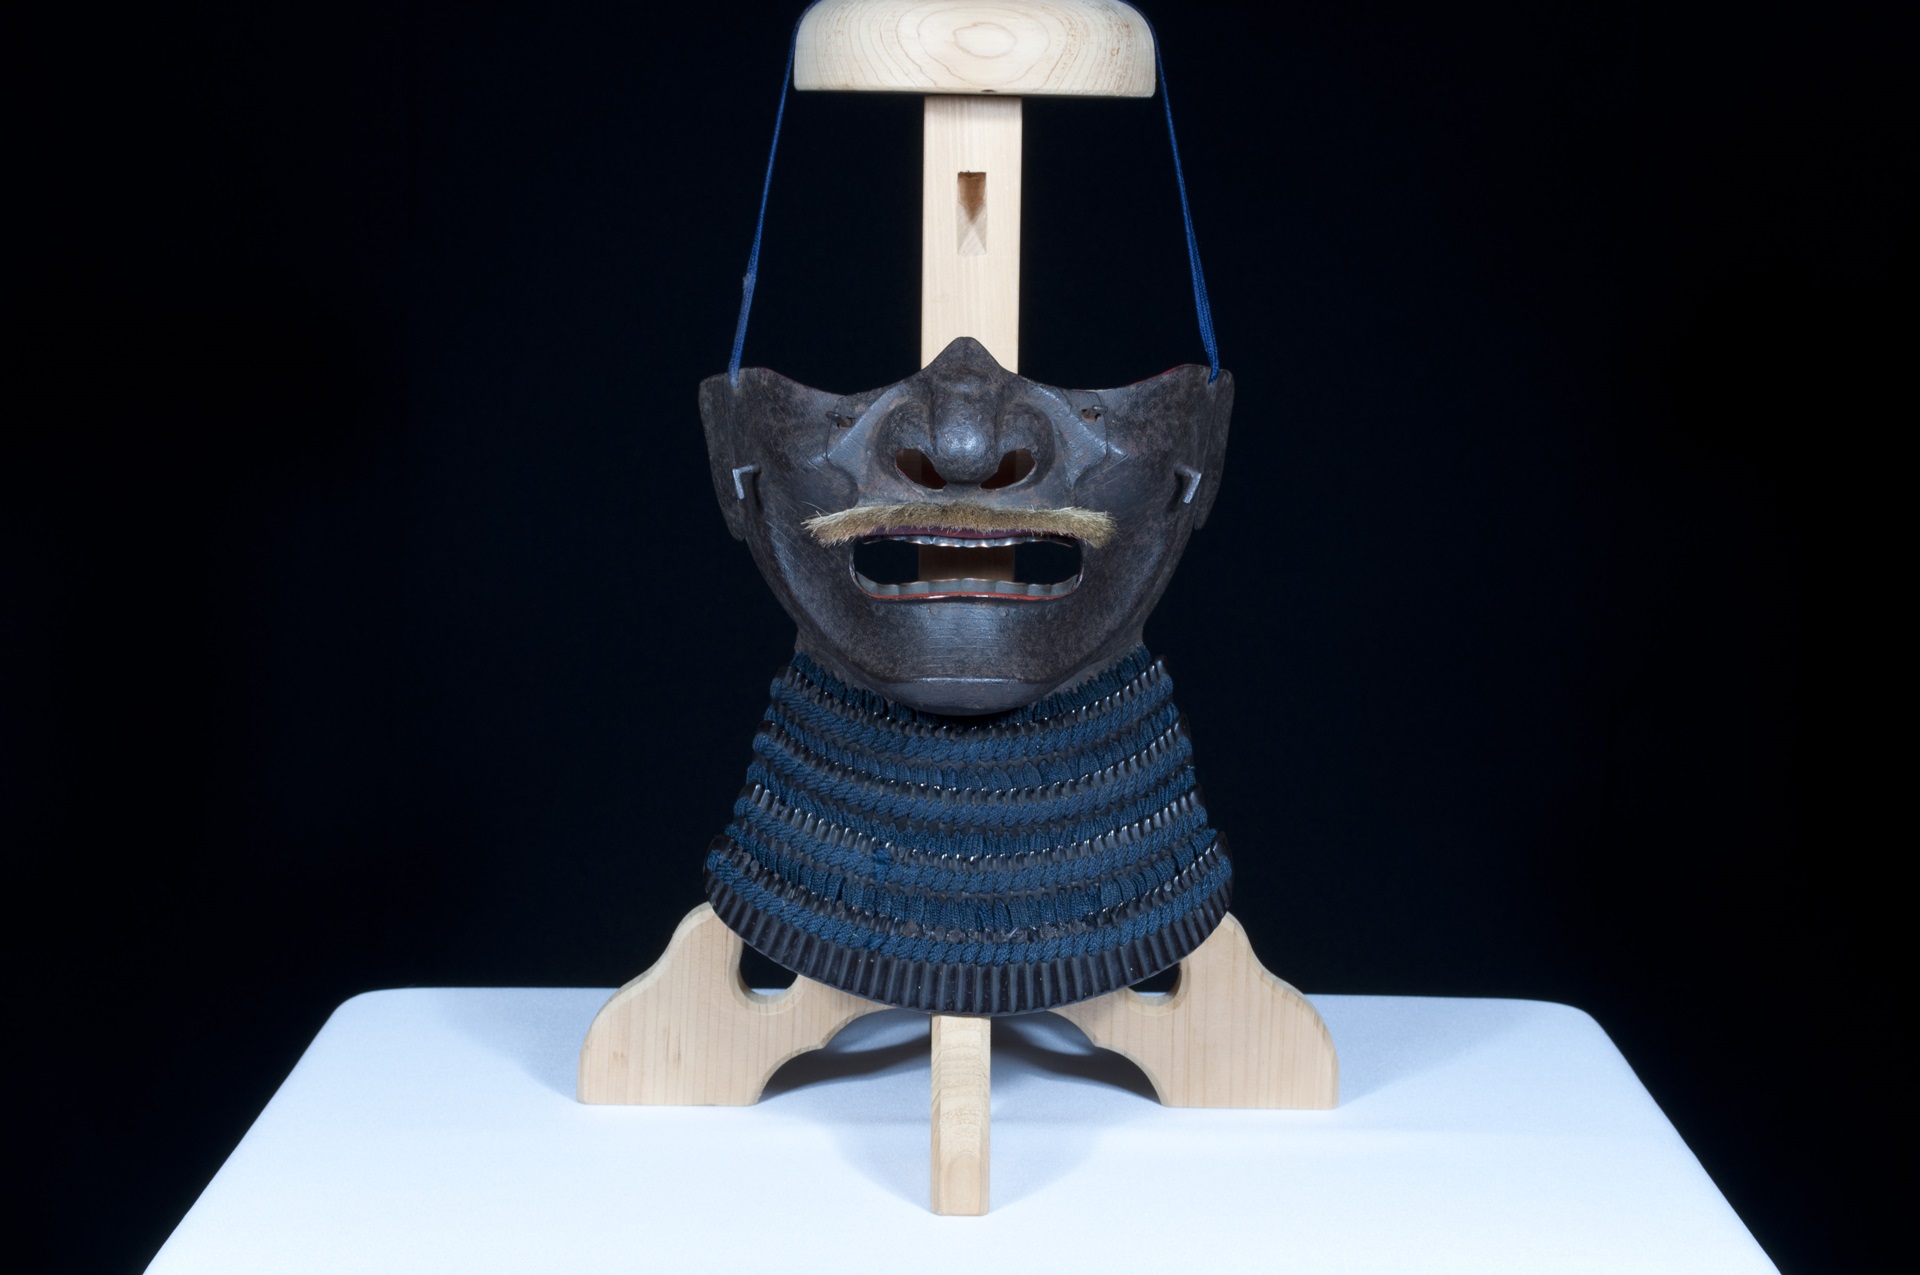 Menpo Iwai Edo japanese armor mask (1)